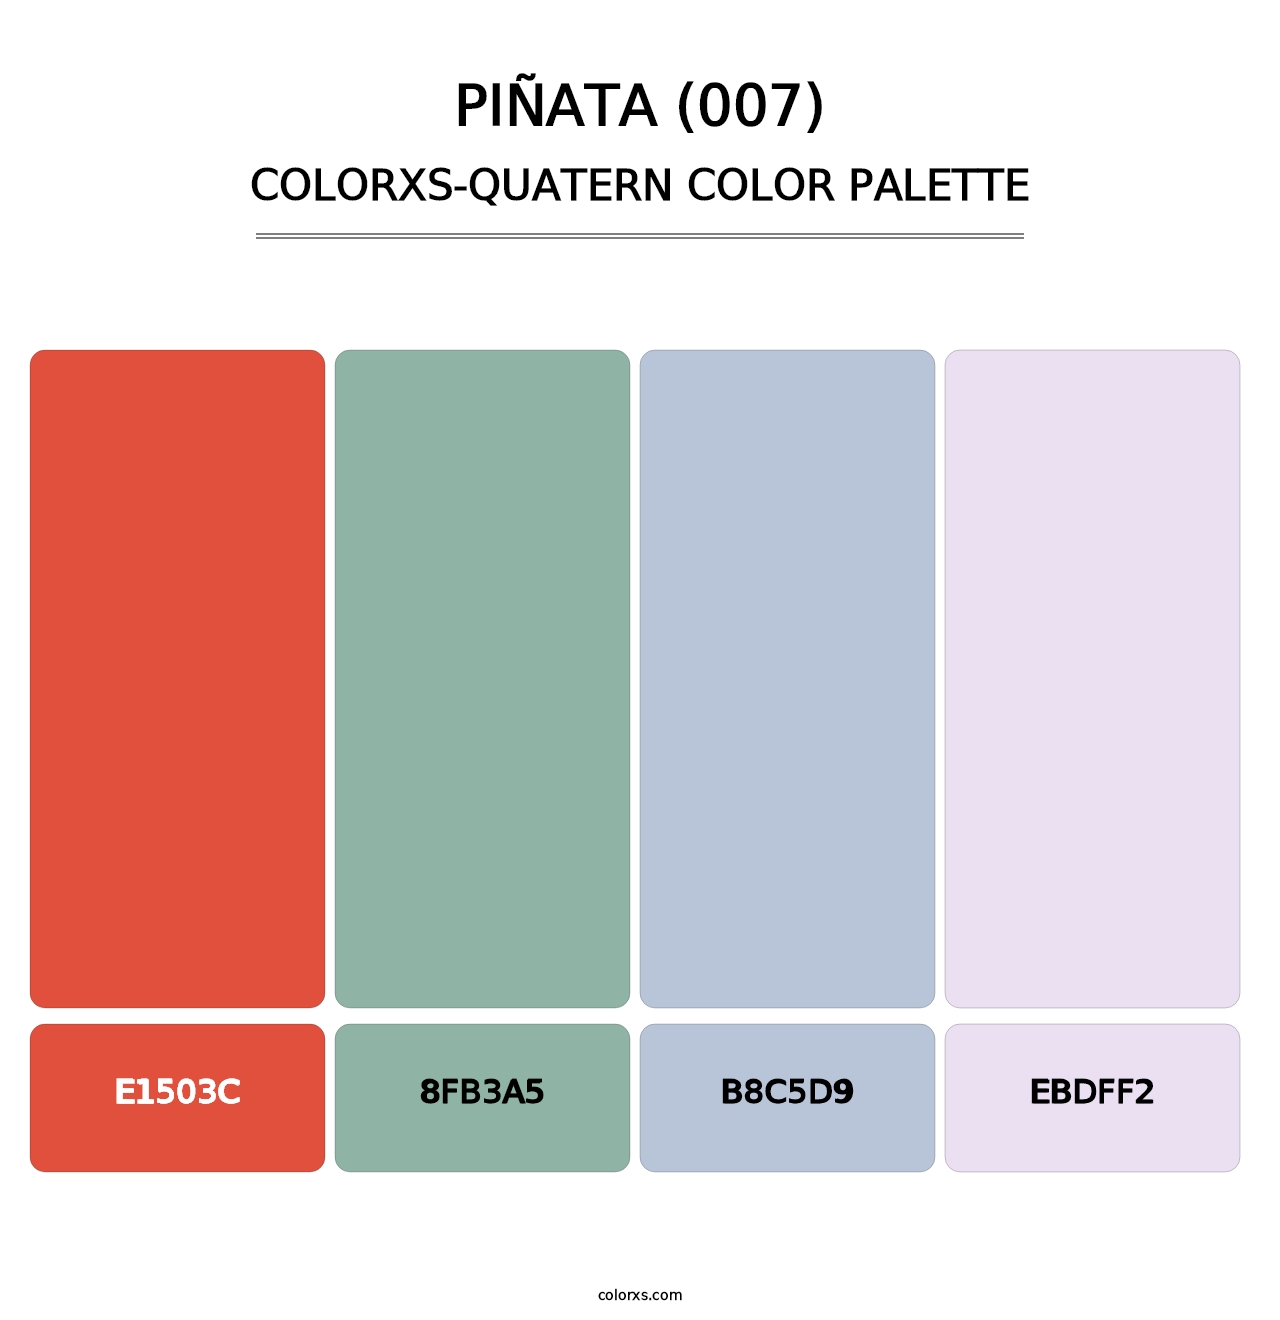 Piñata (007) - Colorxs Quatern Palette